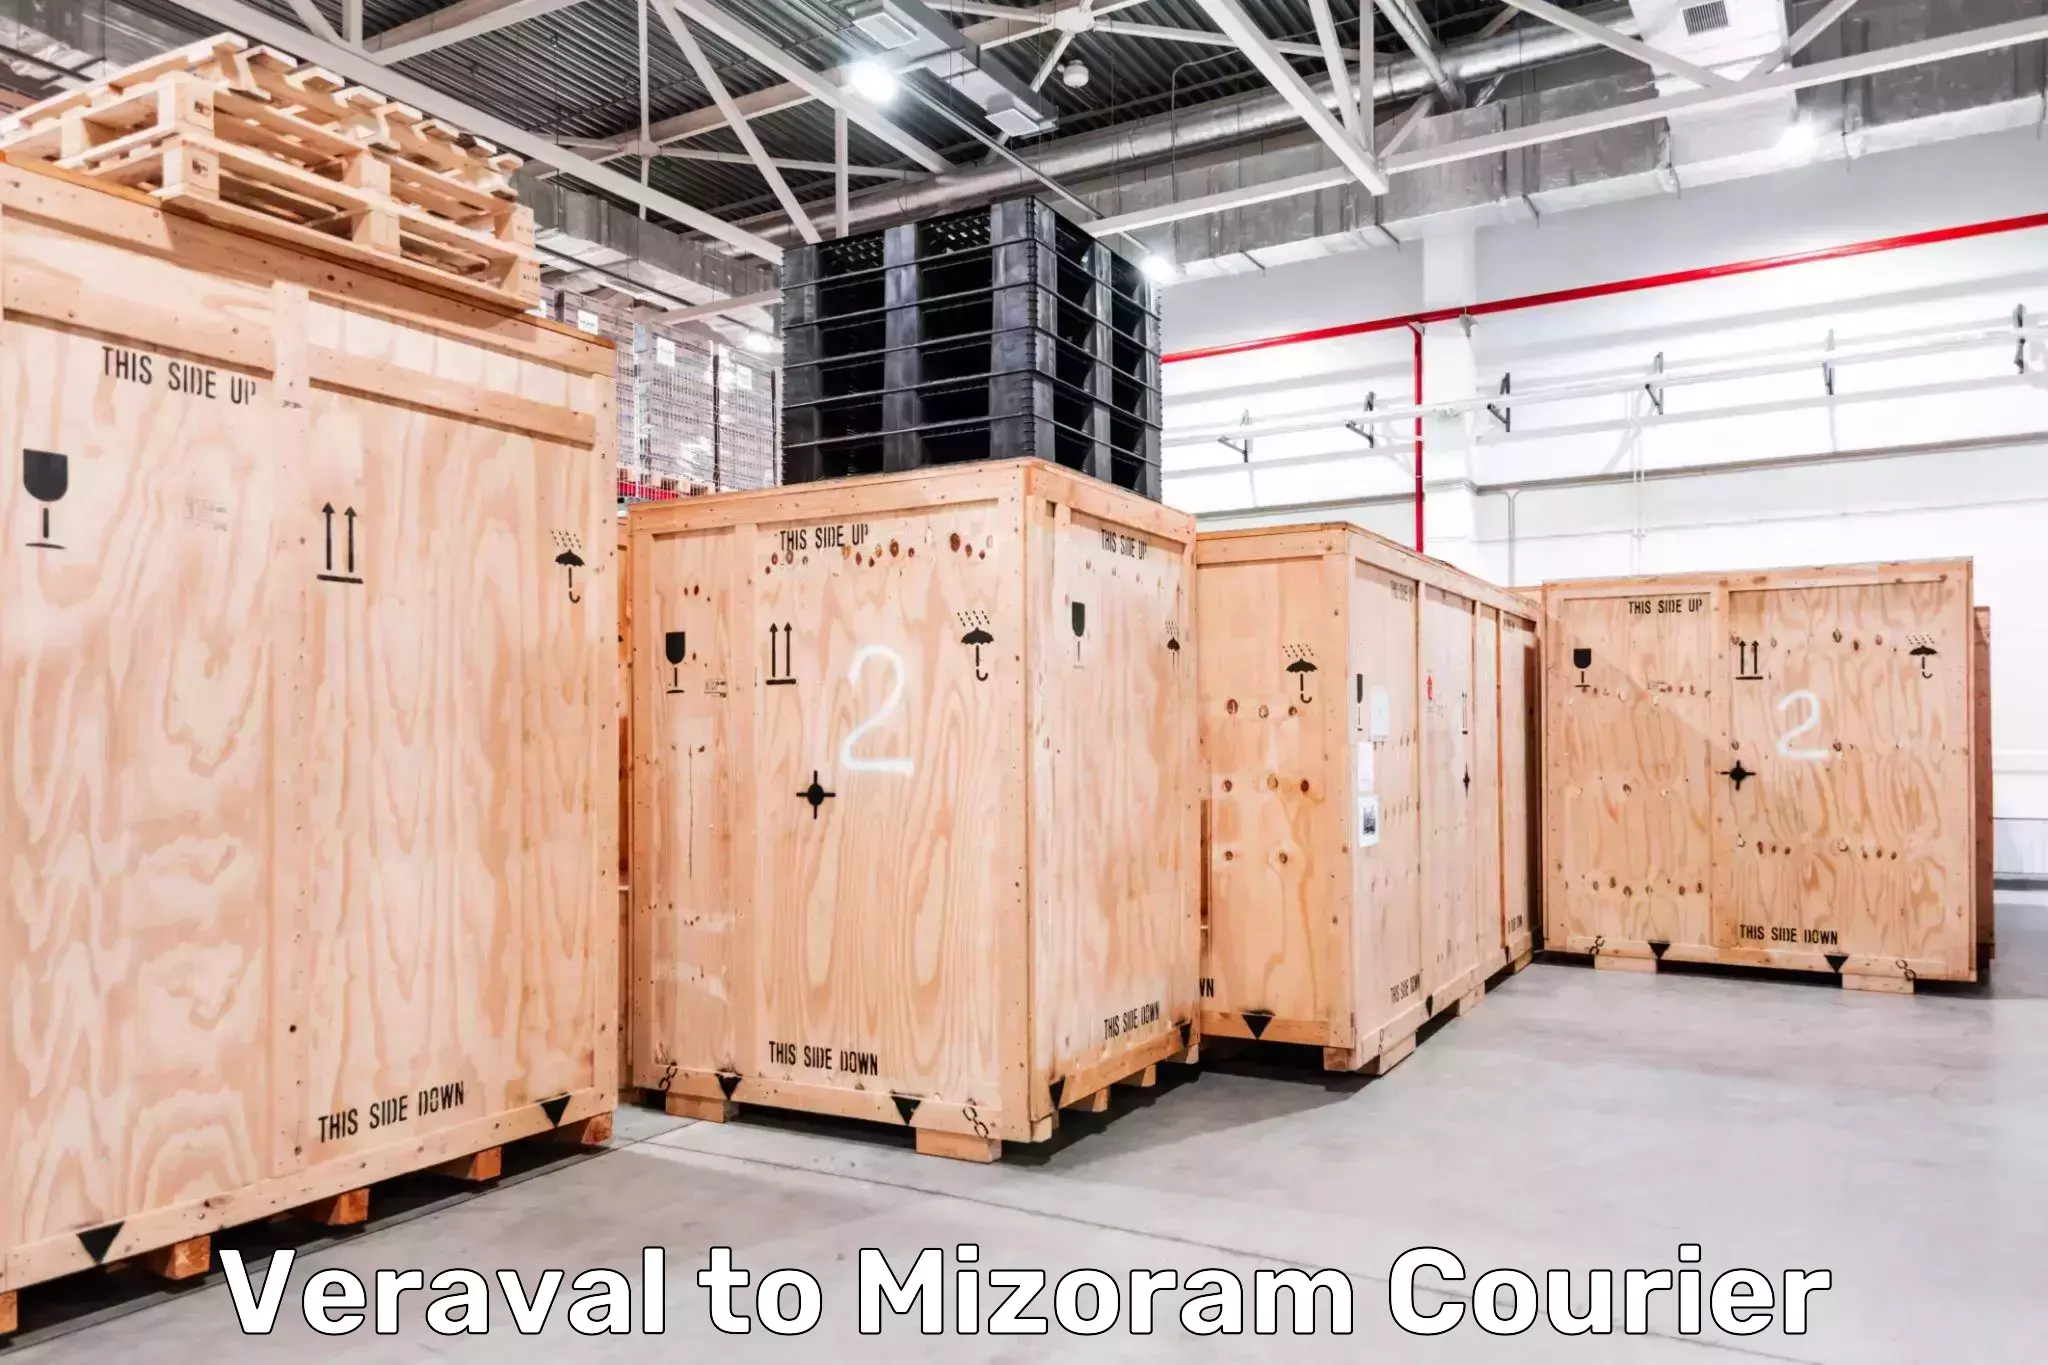 Global logistics network Veraval to Mizoram